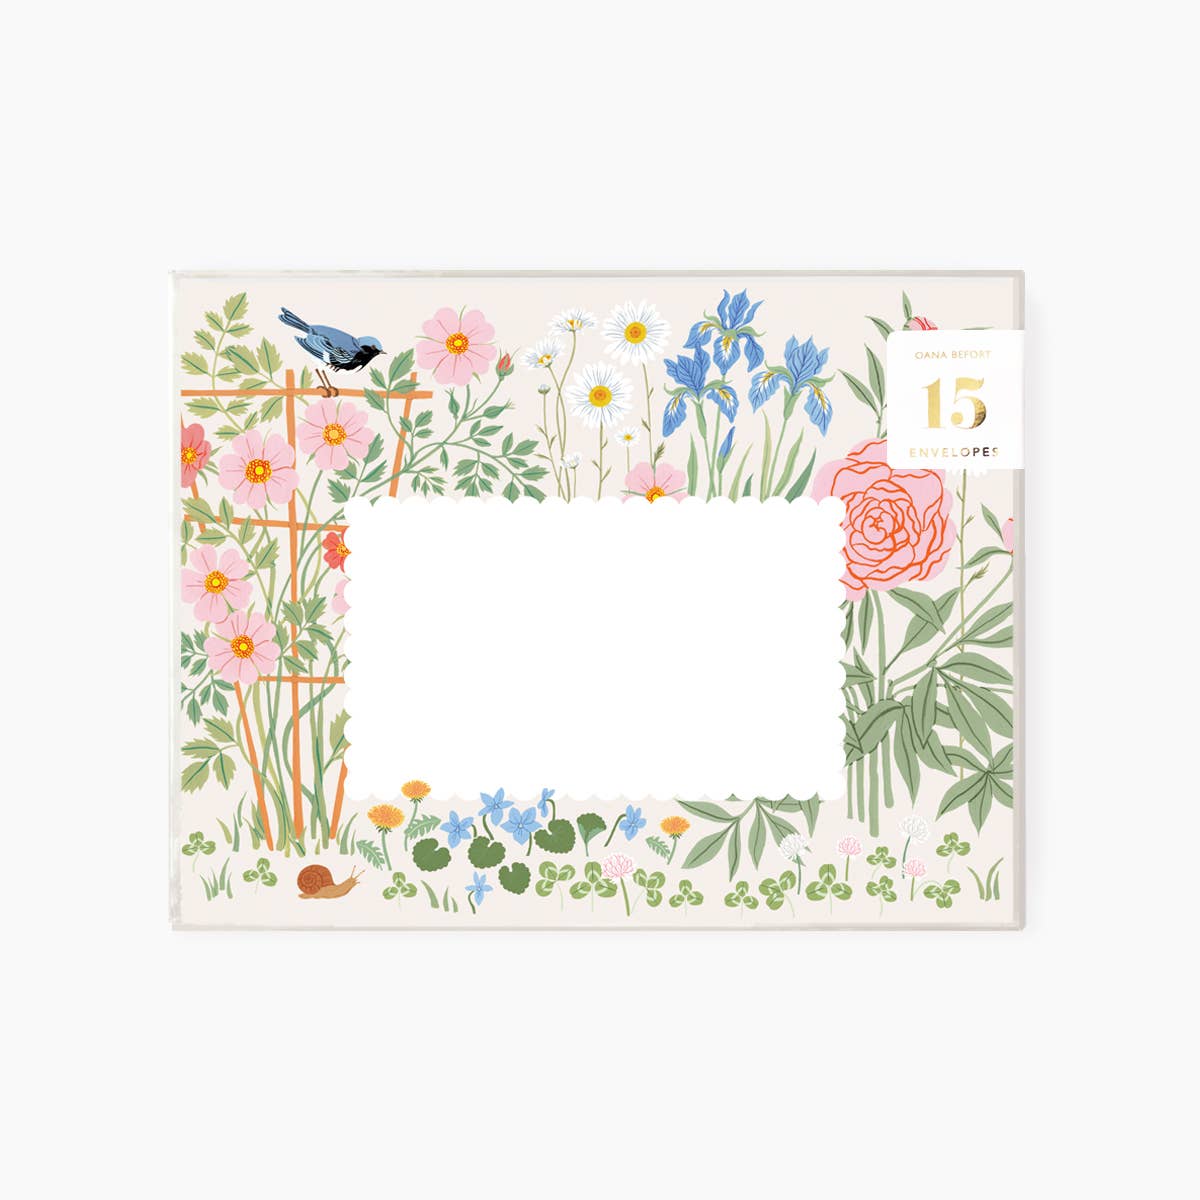 GARDEN | Boxed set of 15 envelopes